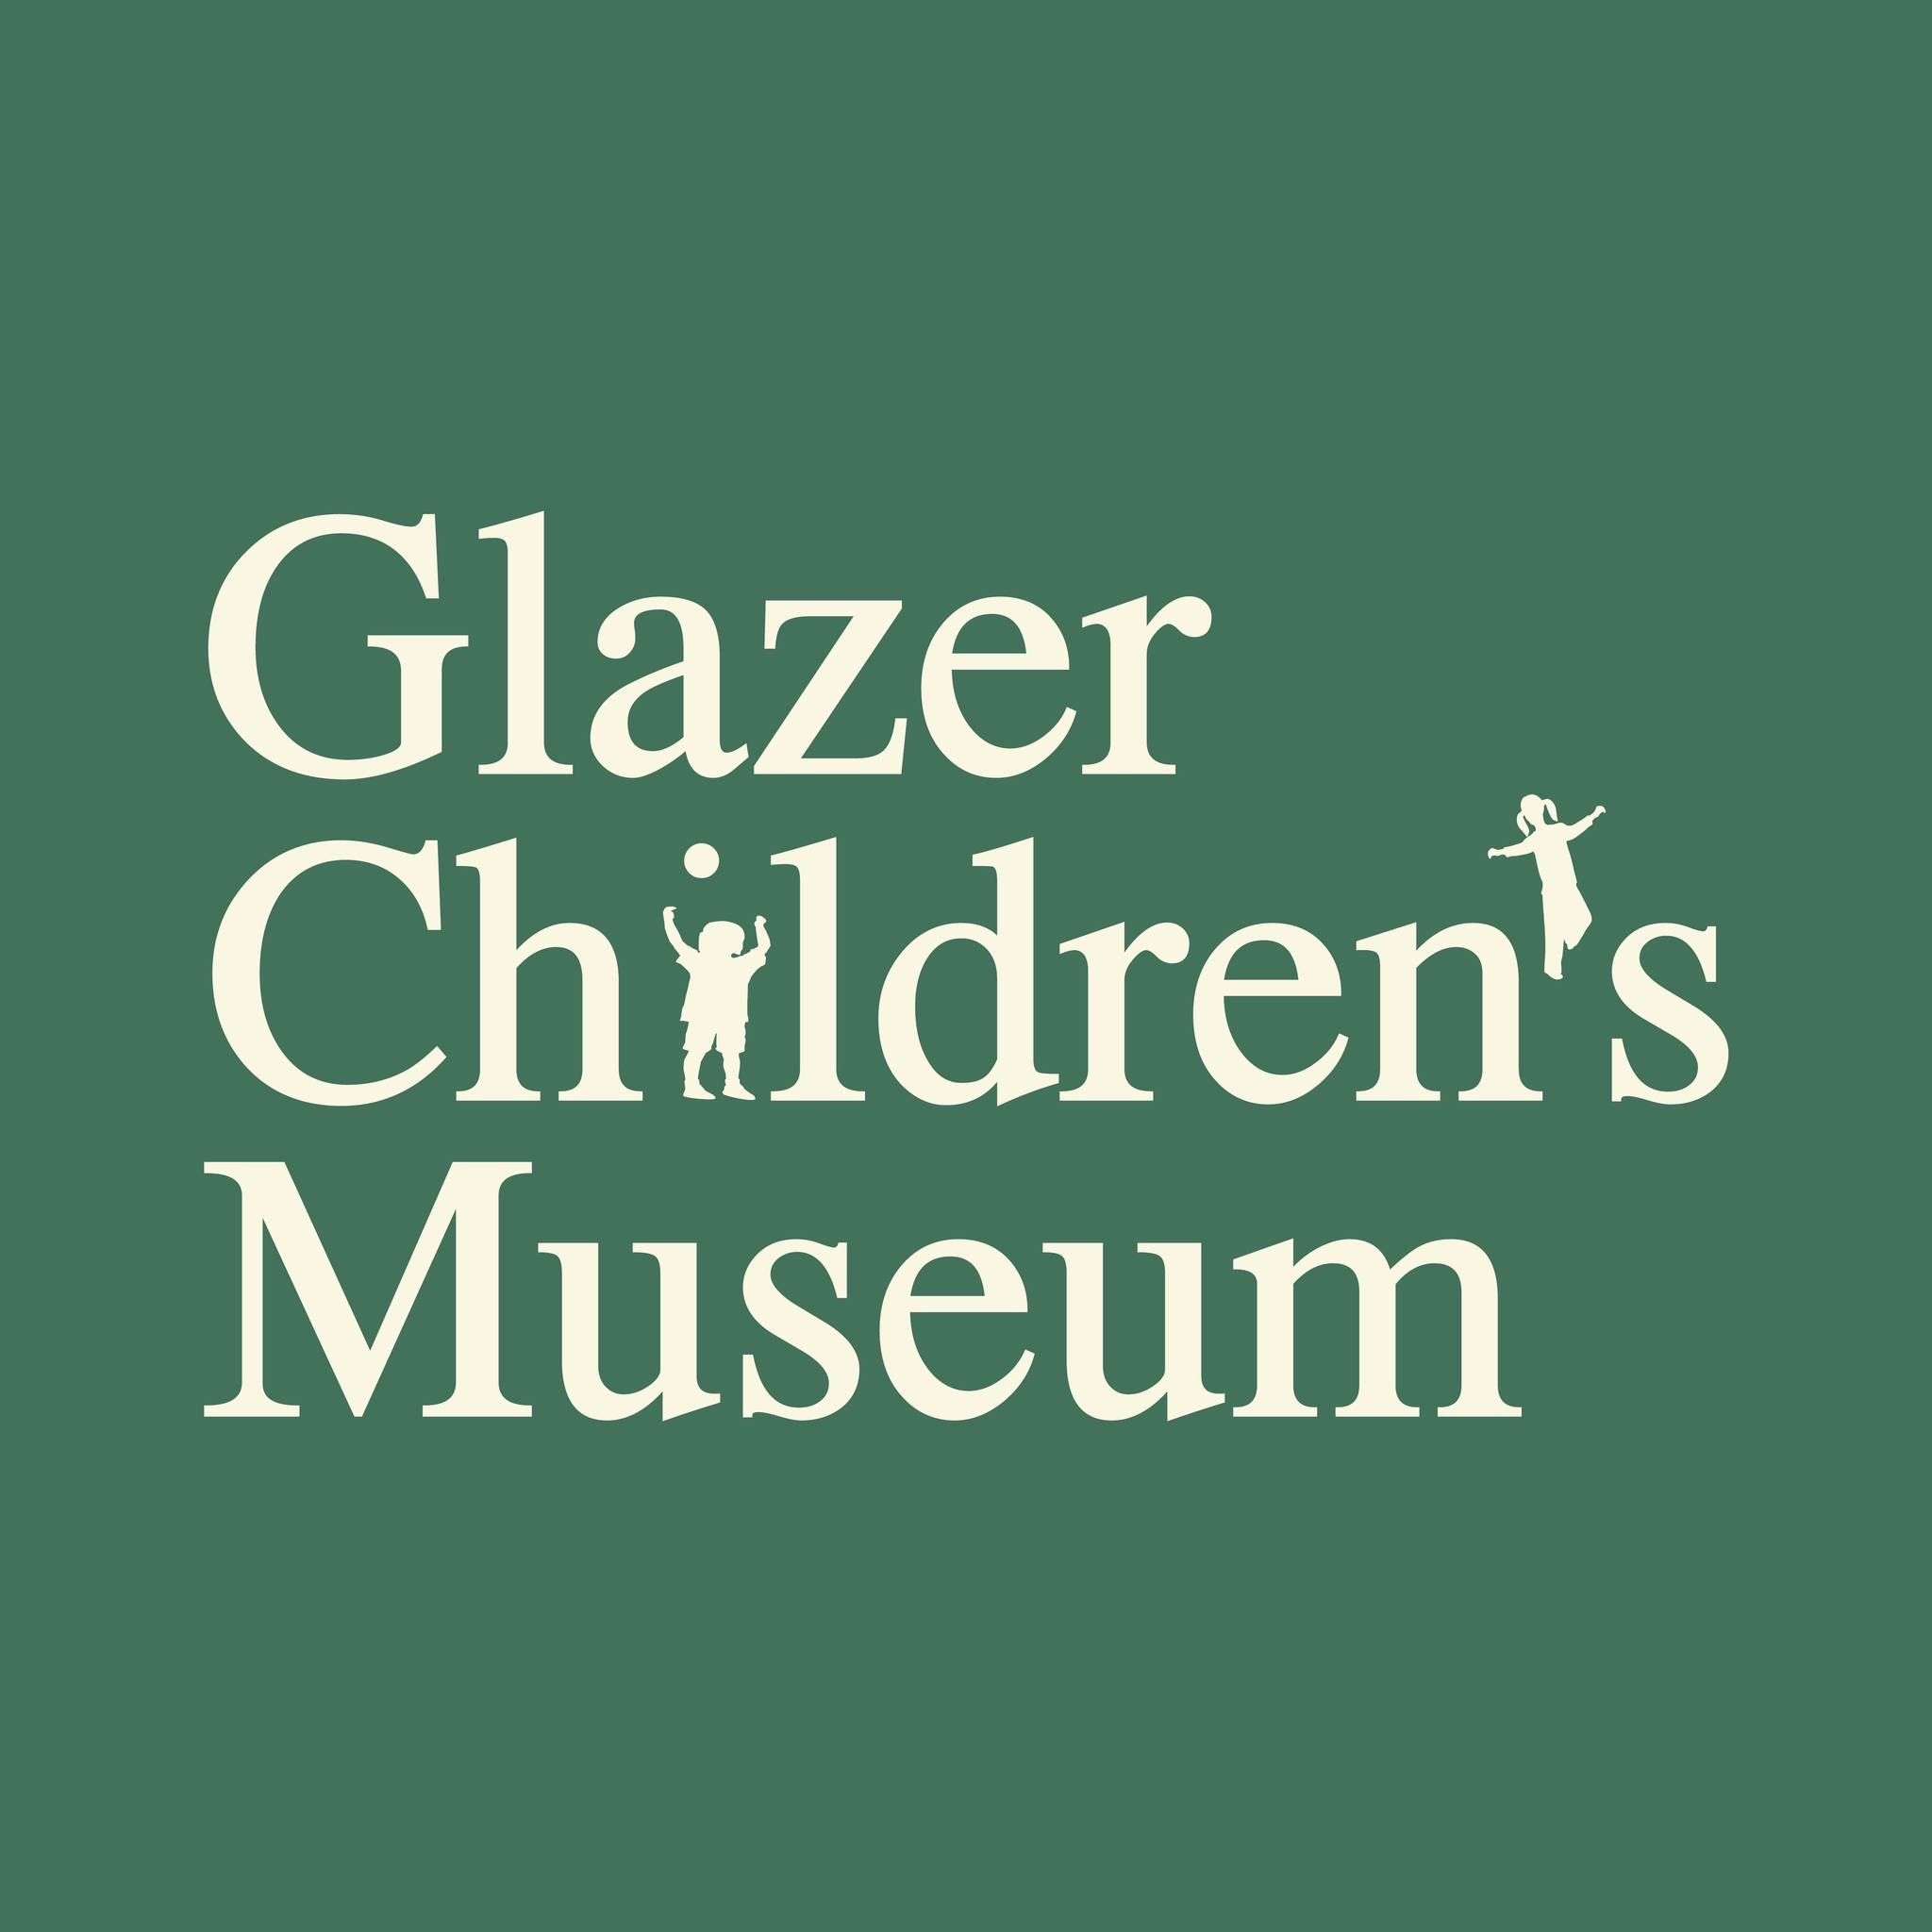 Glazer Children's Museum|Museums|Travel